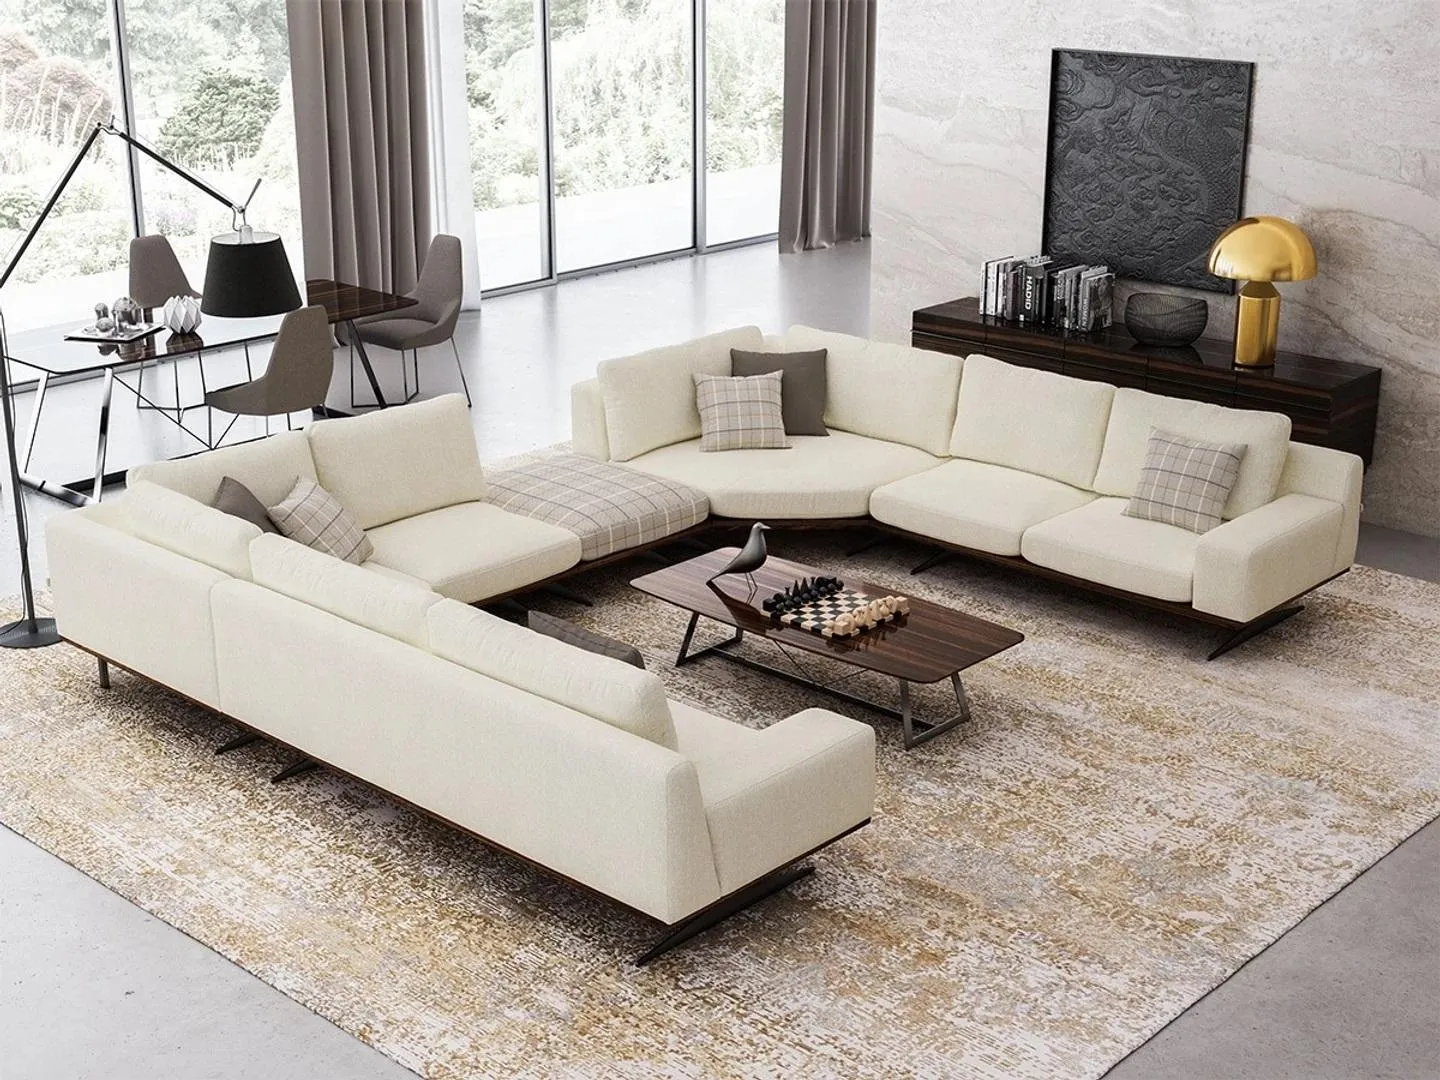 Complete sofa U-shape fabric sofa couch living room design coffee table